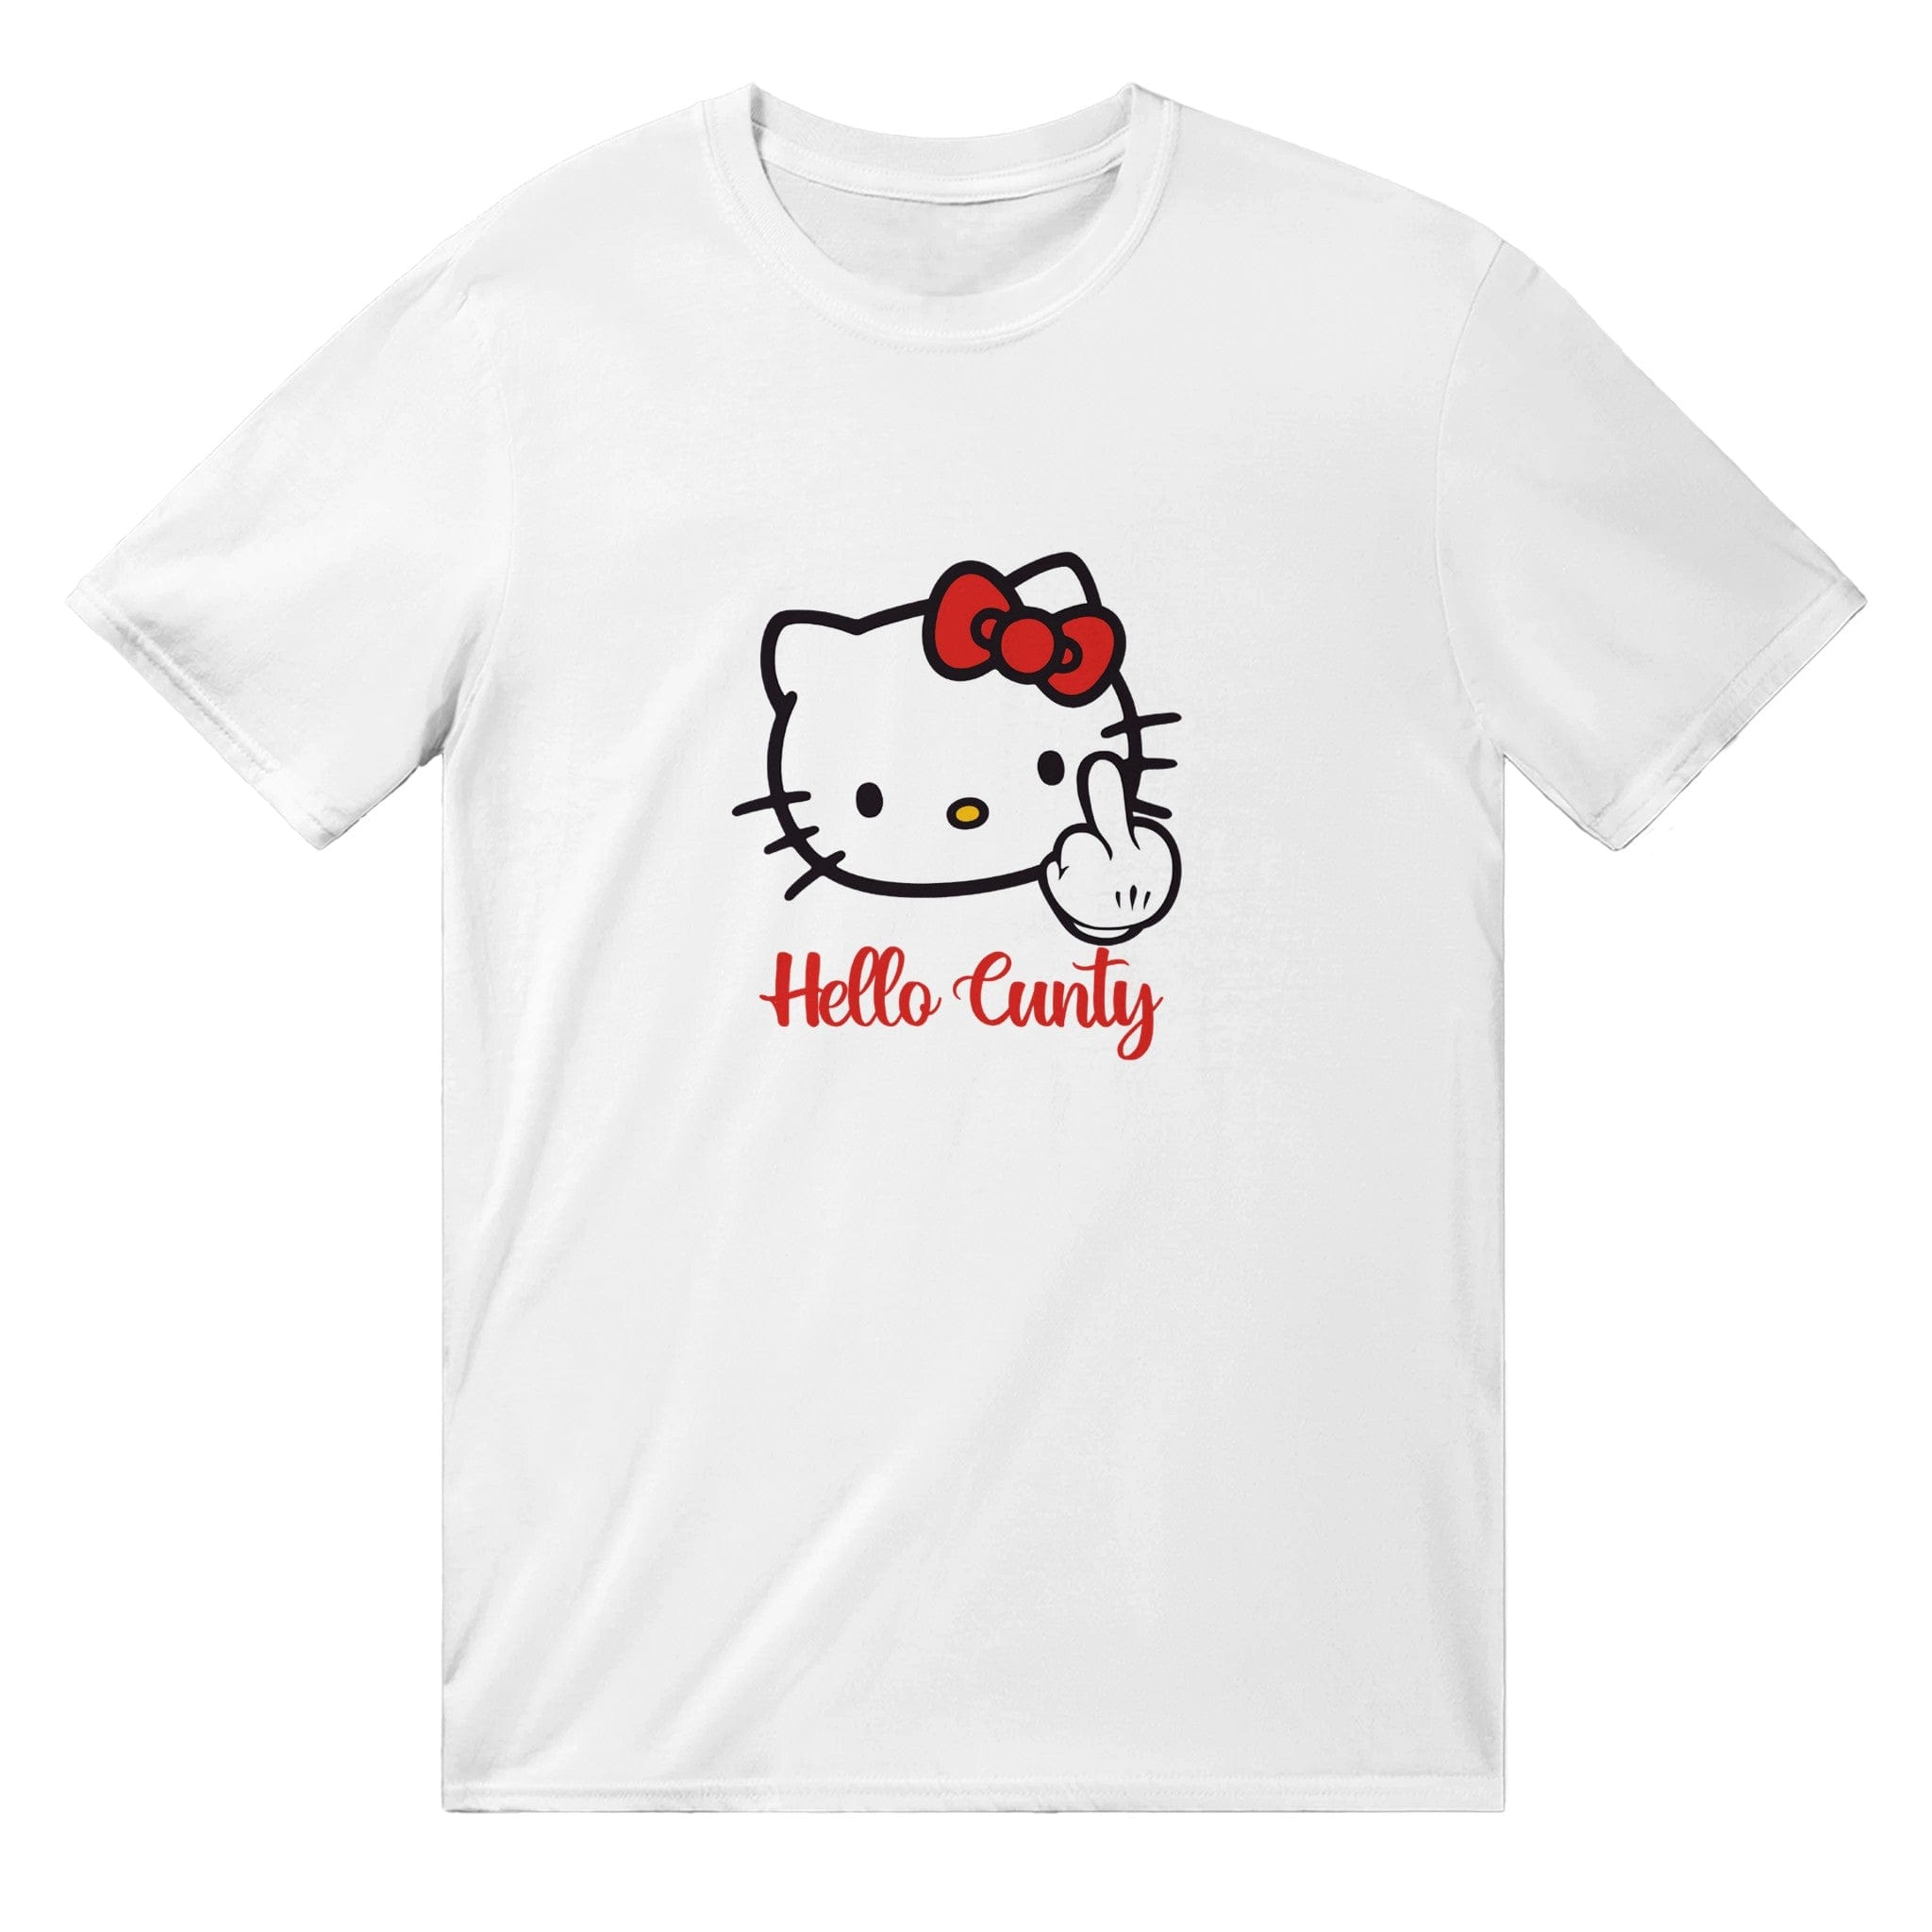 Hello Kitty Rude T-shirt | Rude And Offensive Shirts Australia